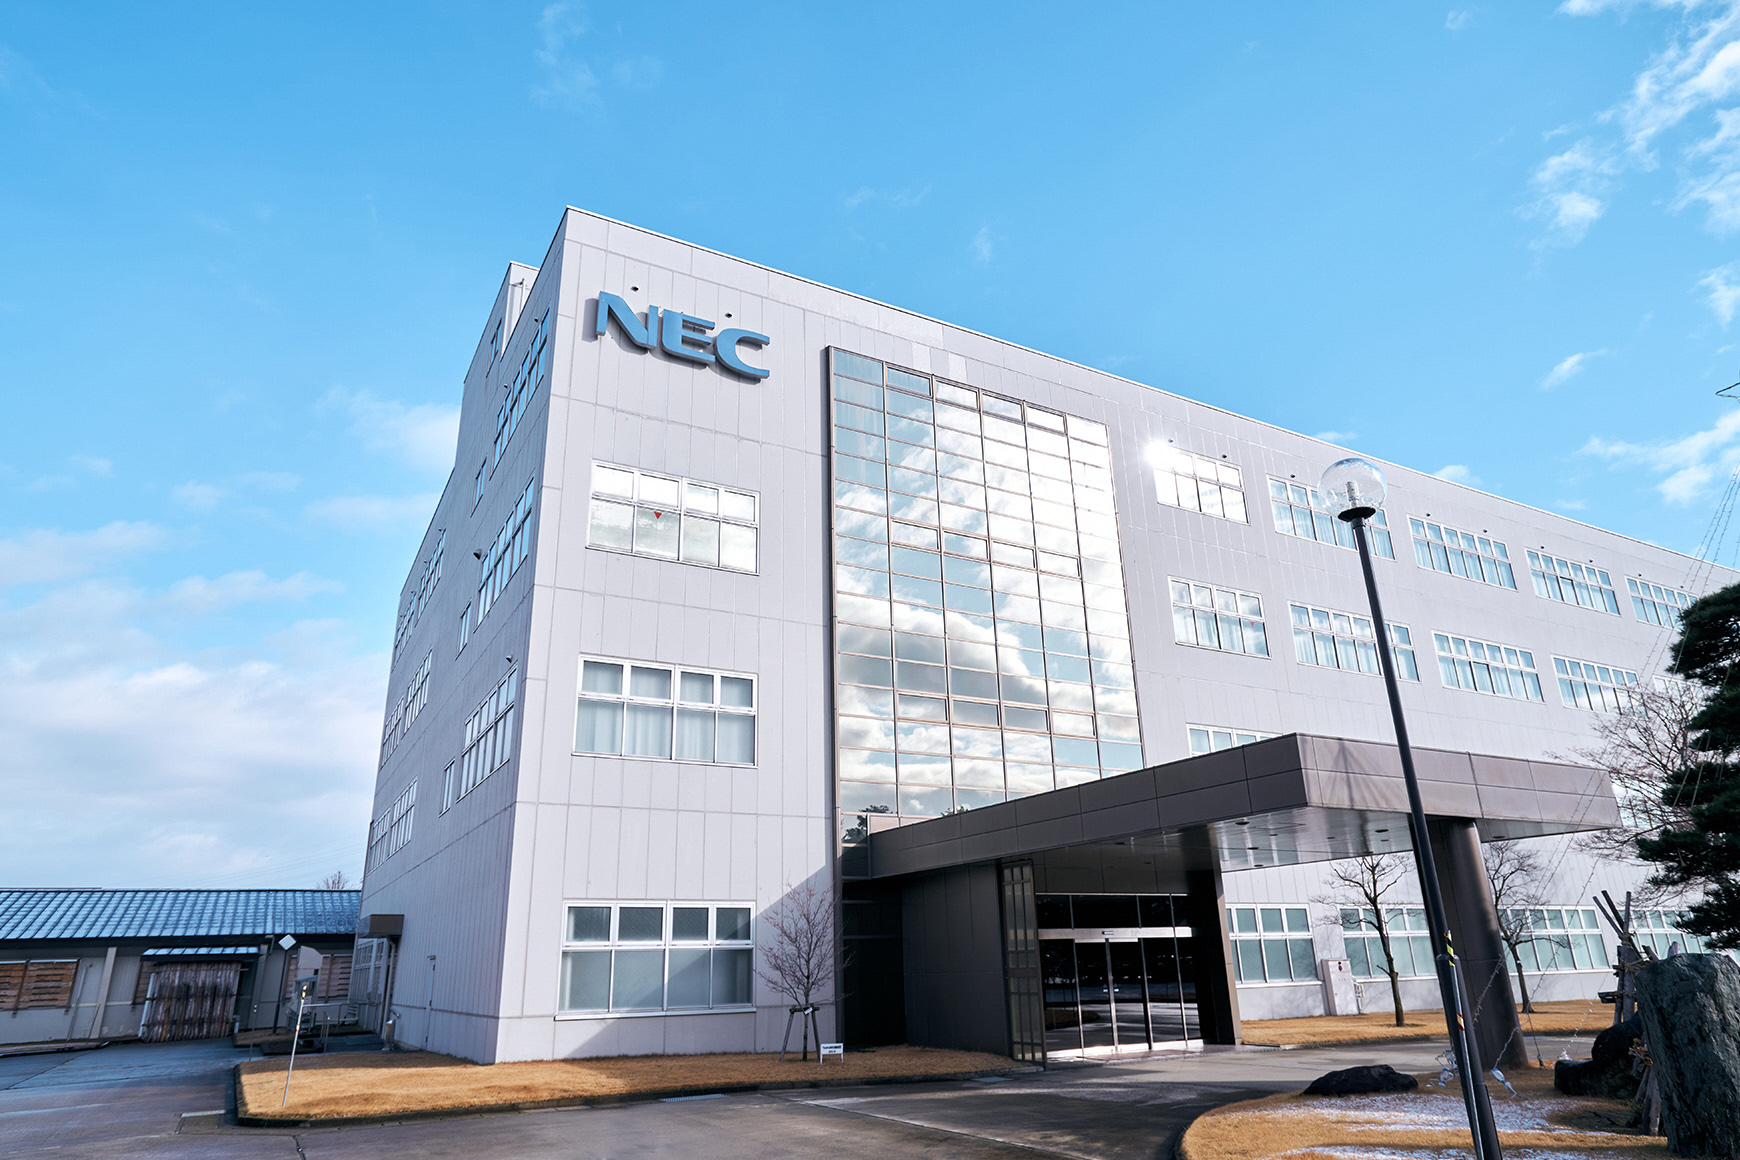 NECパーソナルコンピュータ株式会社